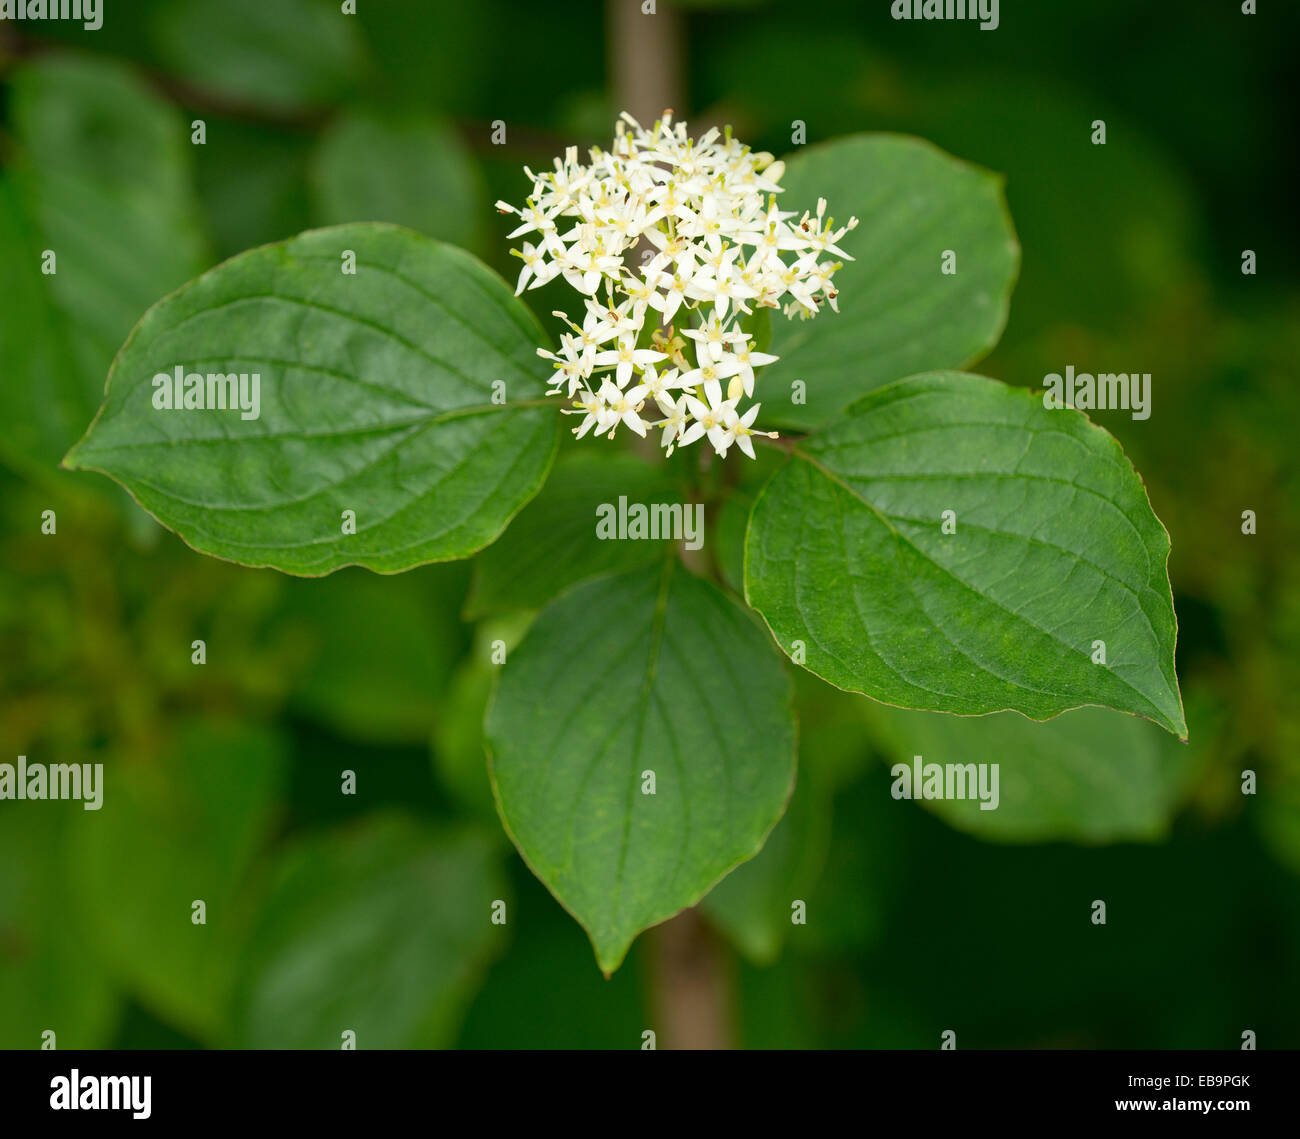 Sanguinella (Cornus sanguinea), fioritura corymb e fogliame, Turingia, Germania Foto Stock